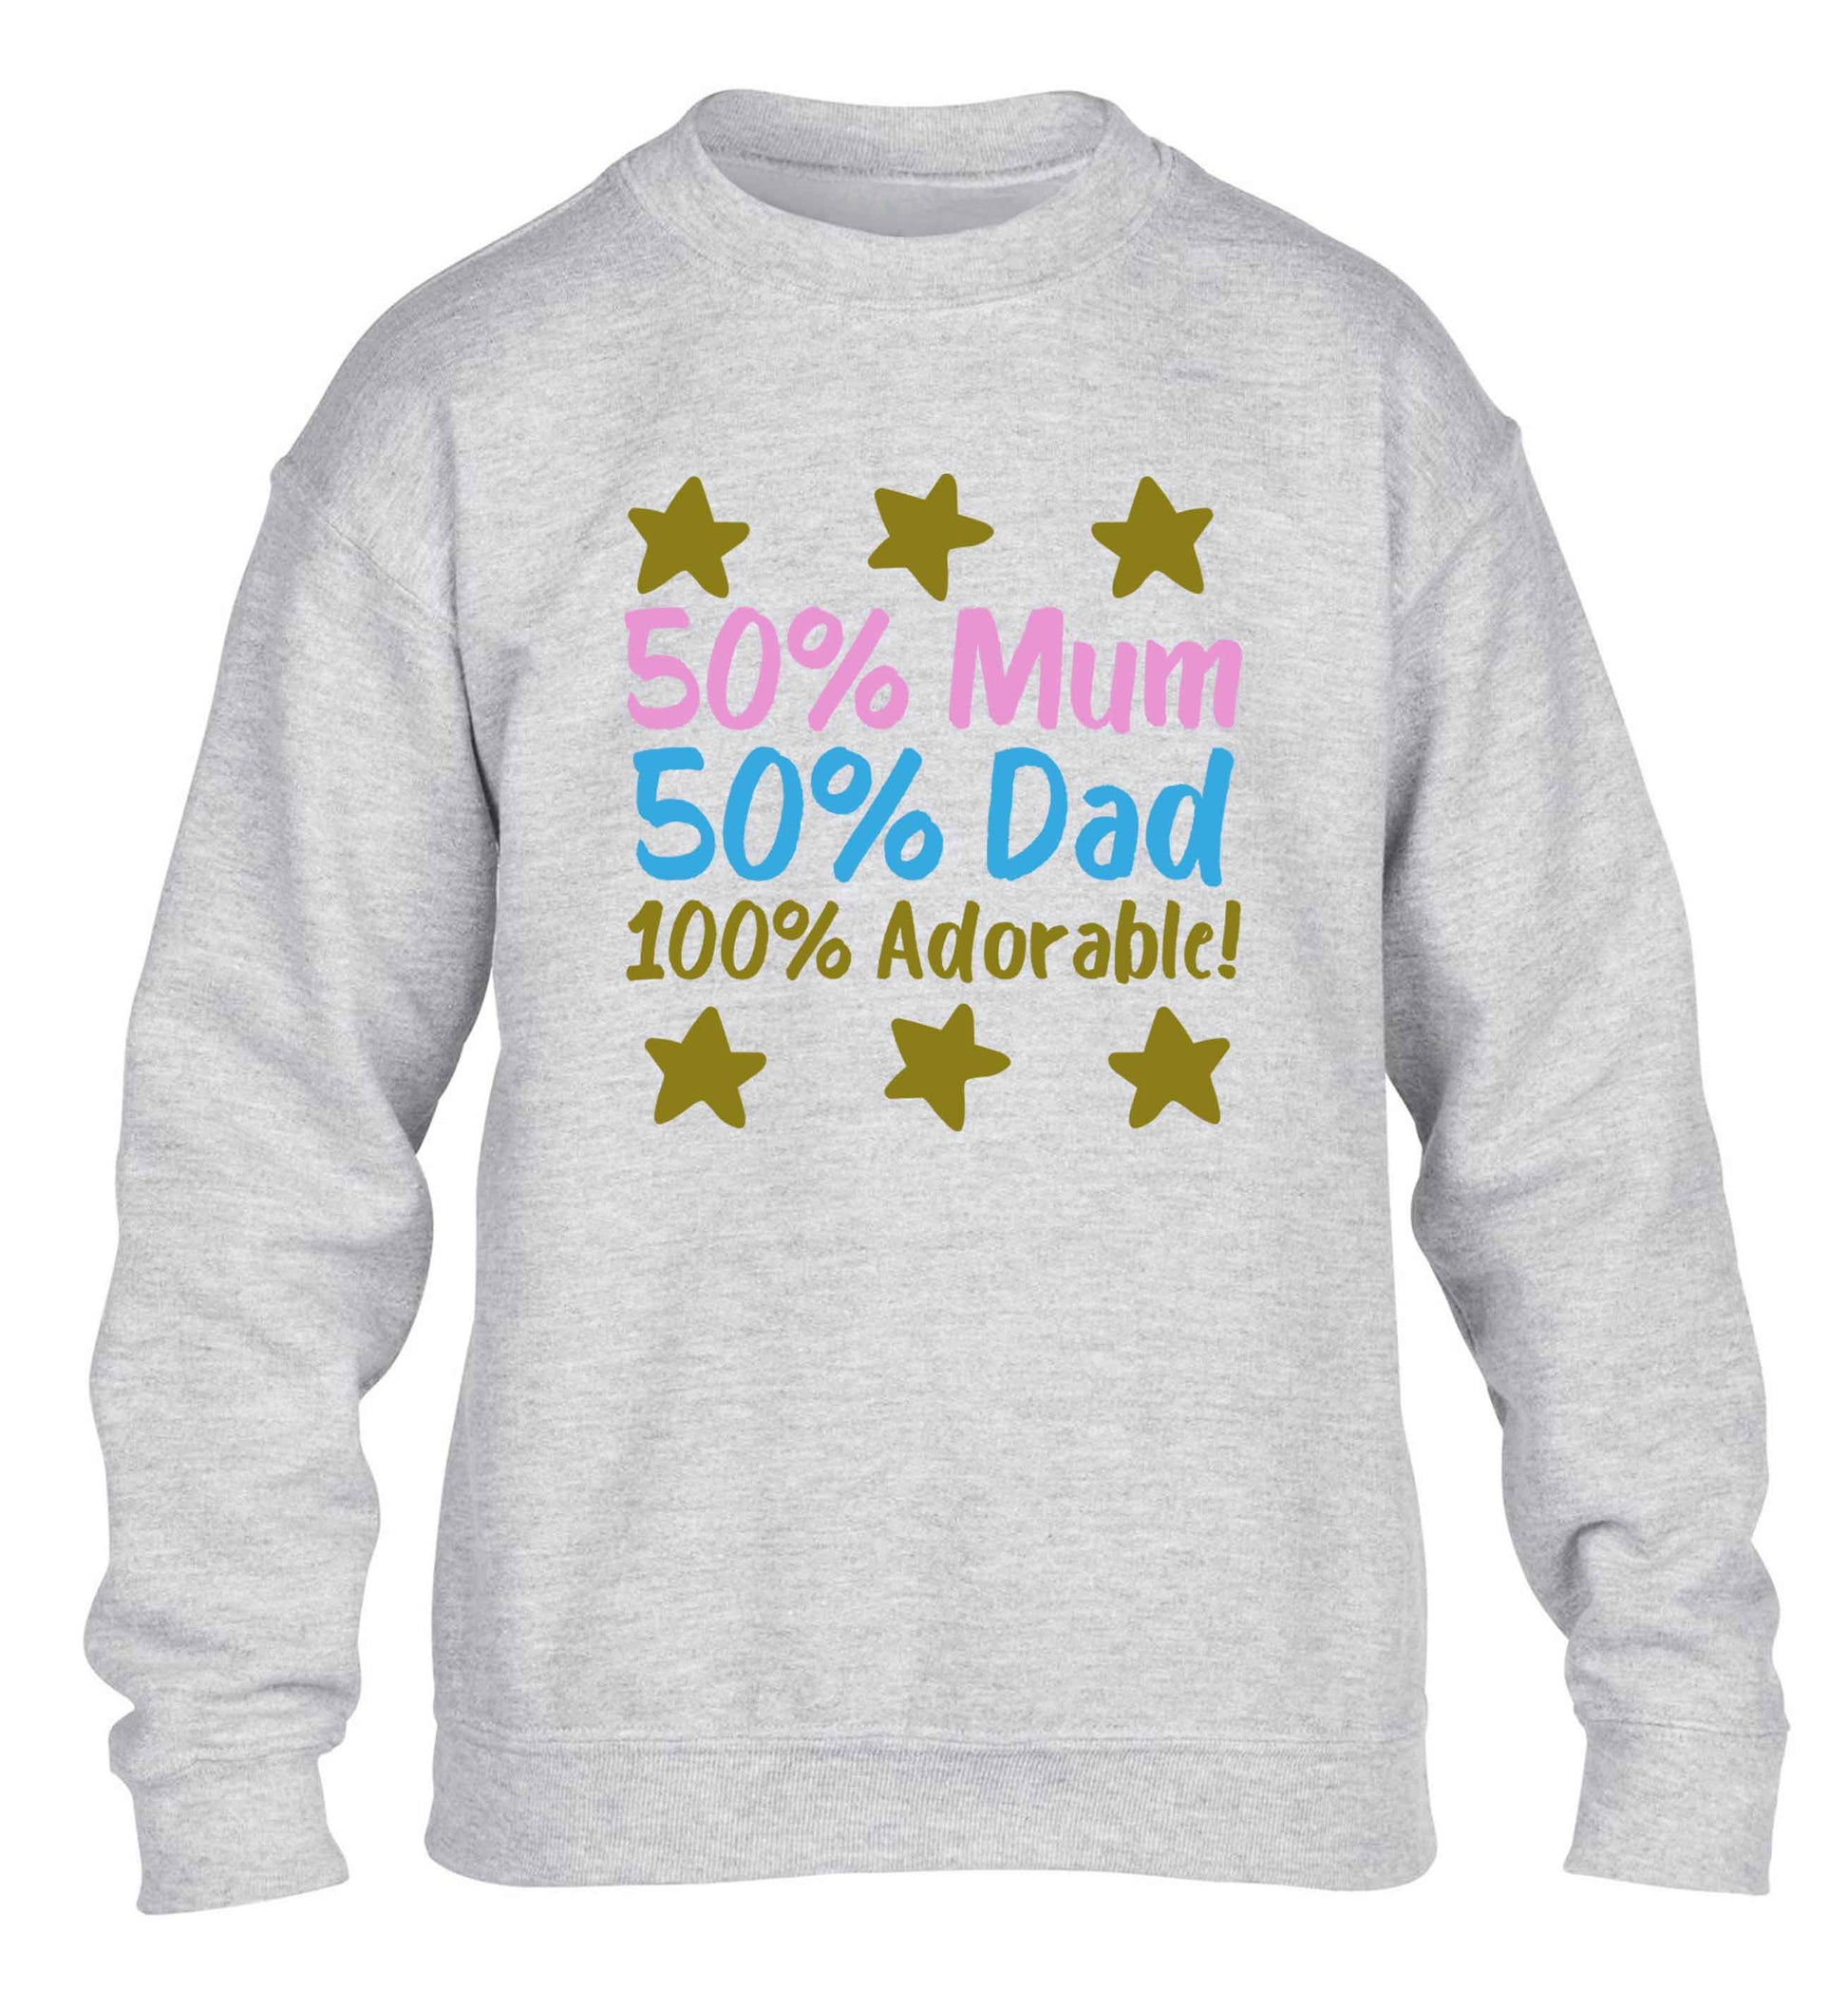 50% mum 50% dad 100% adorable children's grey sweater 12-13 Years